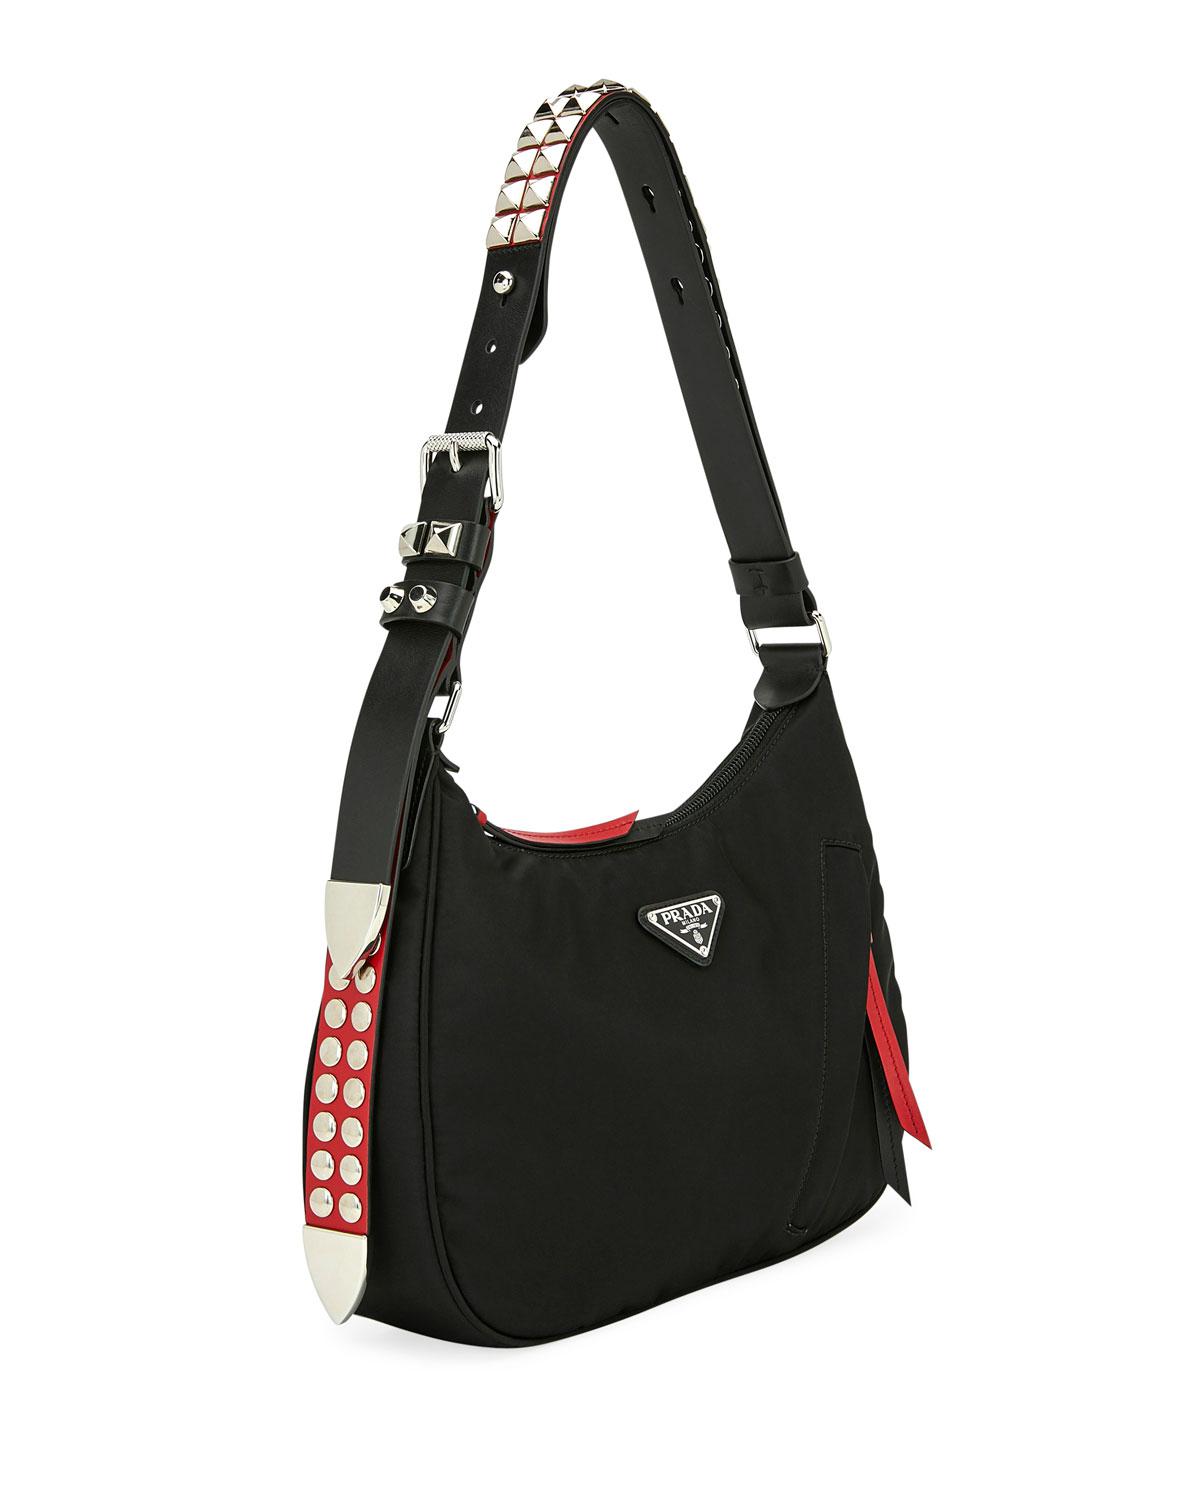 Prada Black Nylon Hobo Bag With Leather And Studs | Lyst